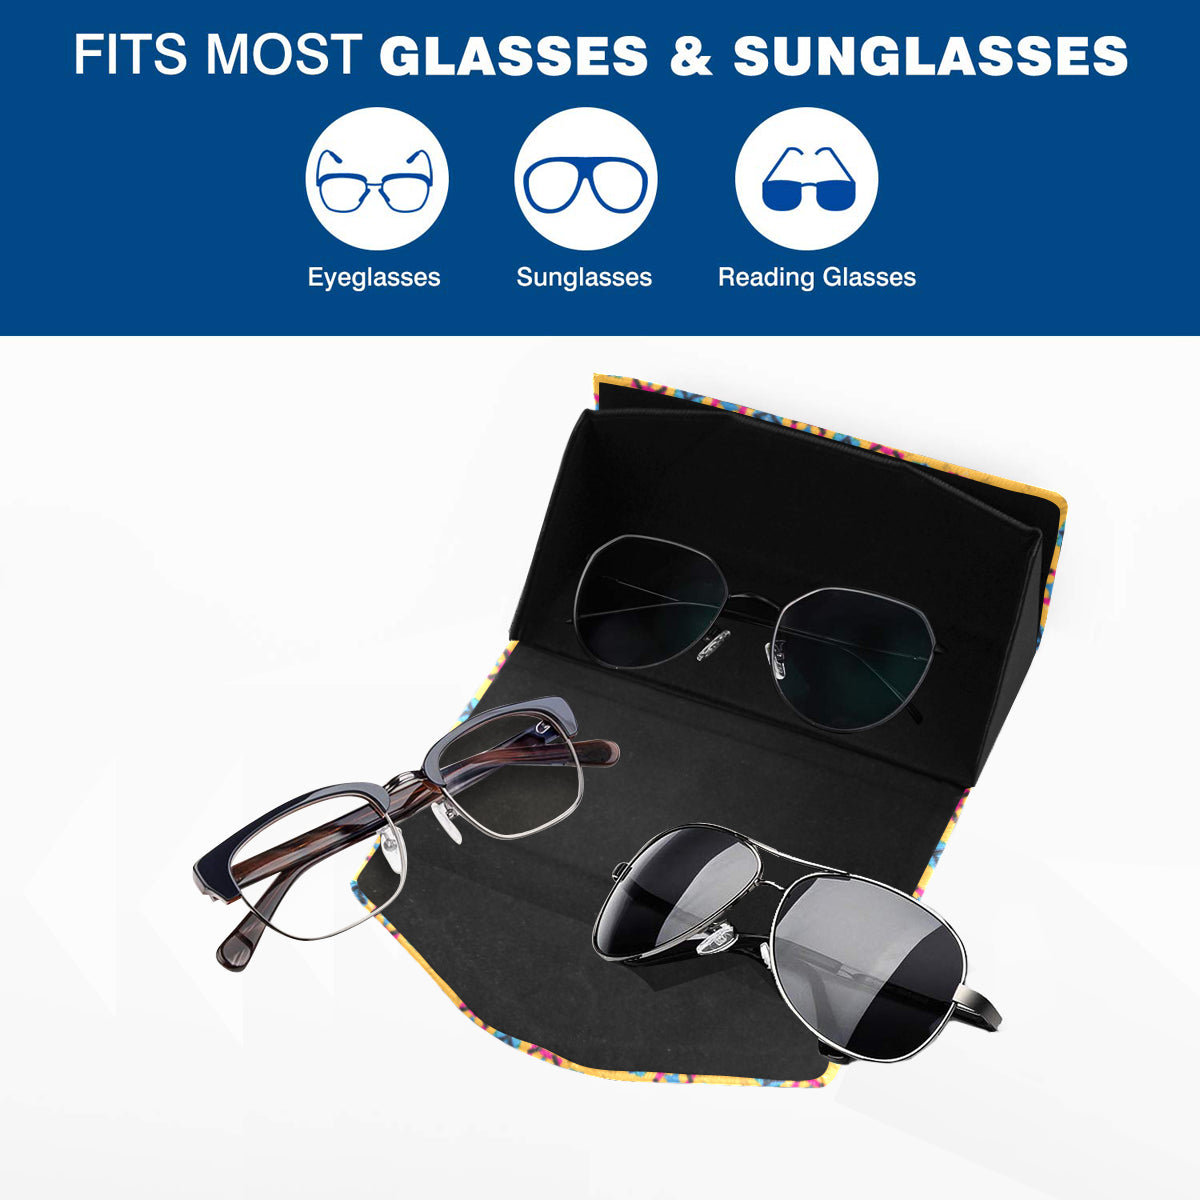 flyersetcinc Alternate Print Foldable Glasses Case